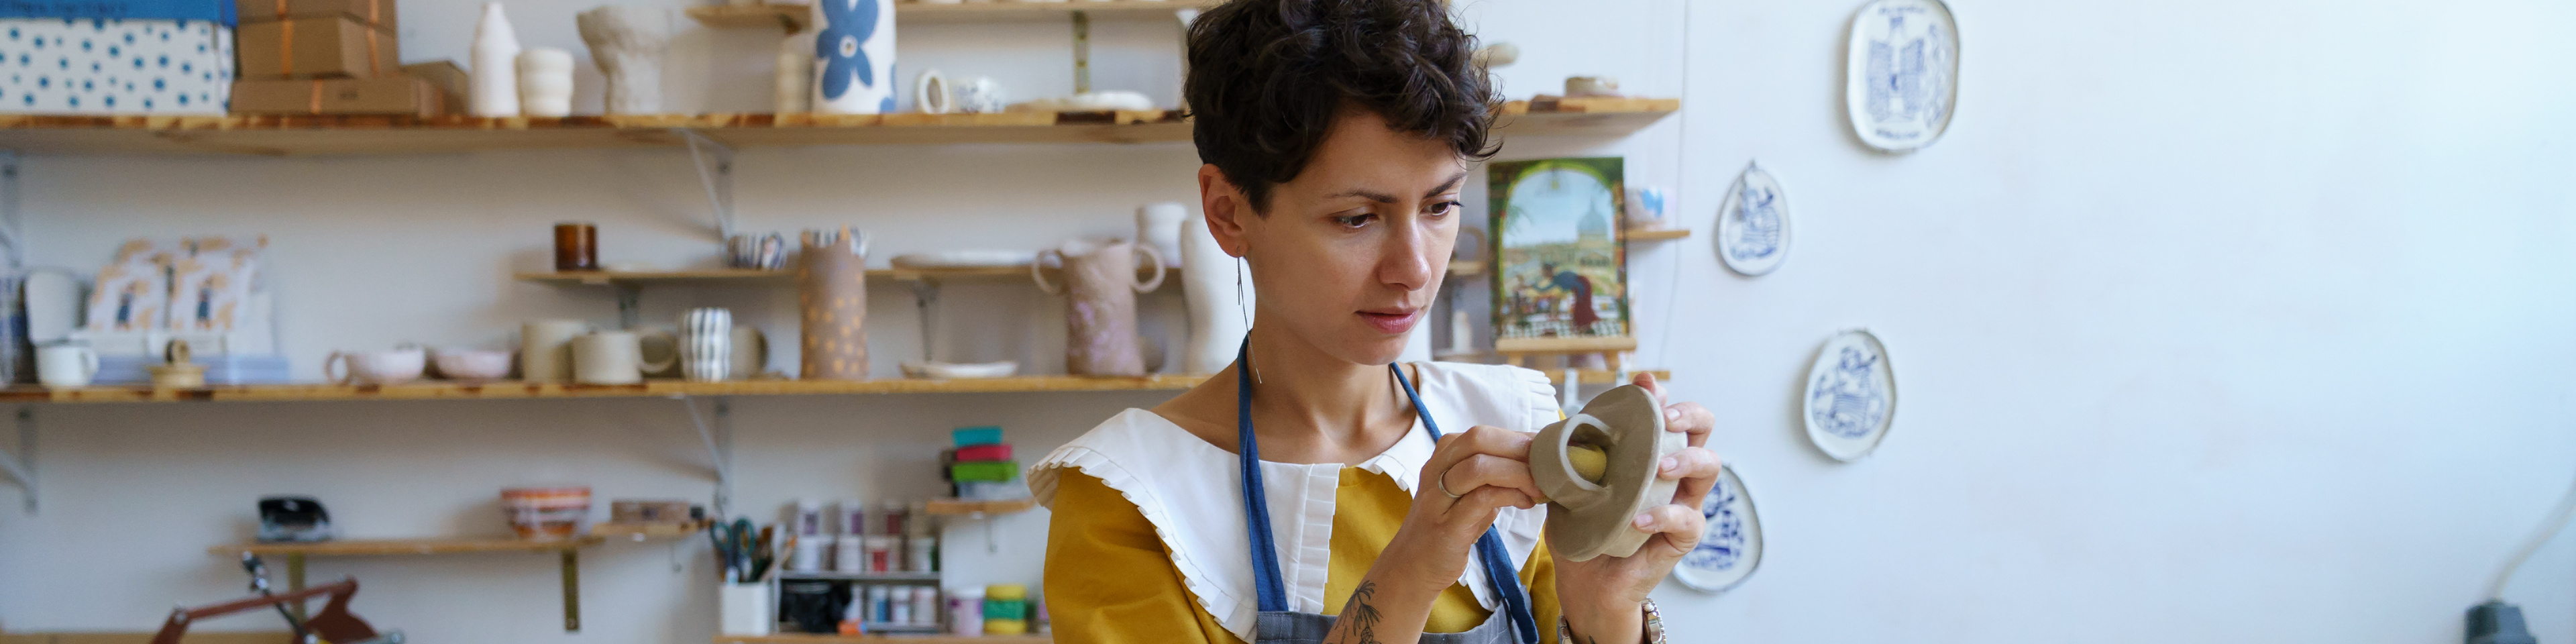 Woman potter holding paintbrush, painting on clay jug.jpeg